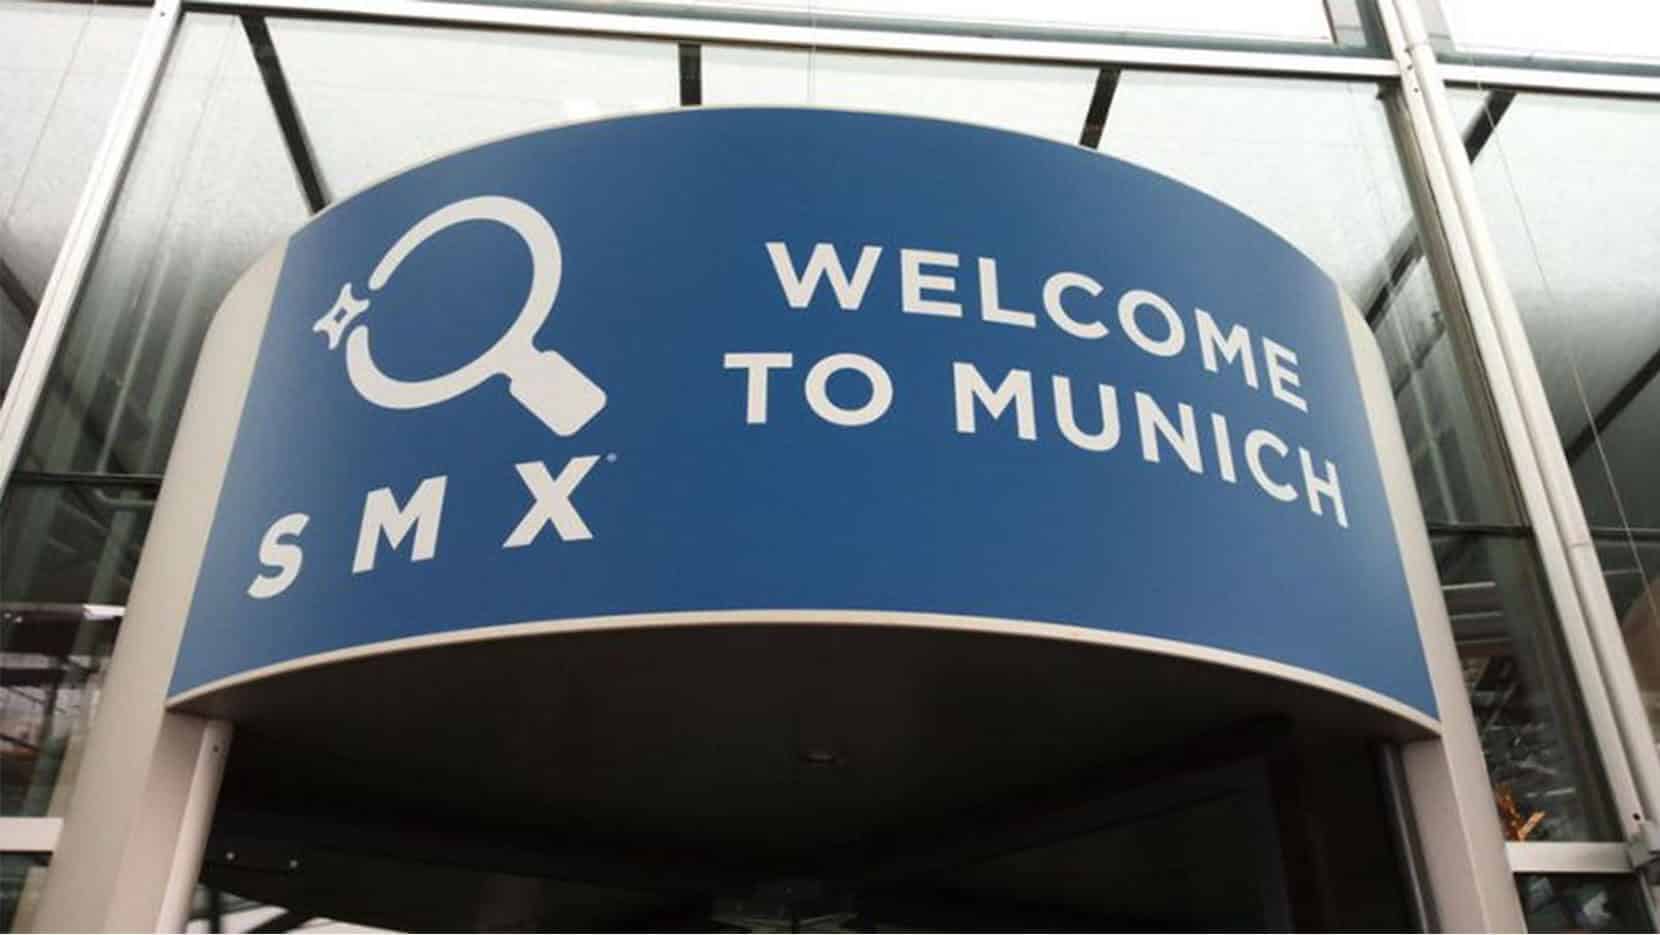 Welcome at SMX Munich 2018